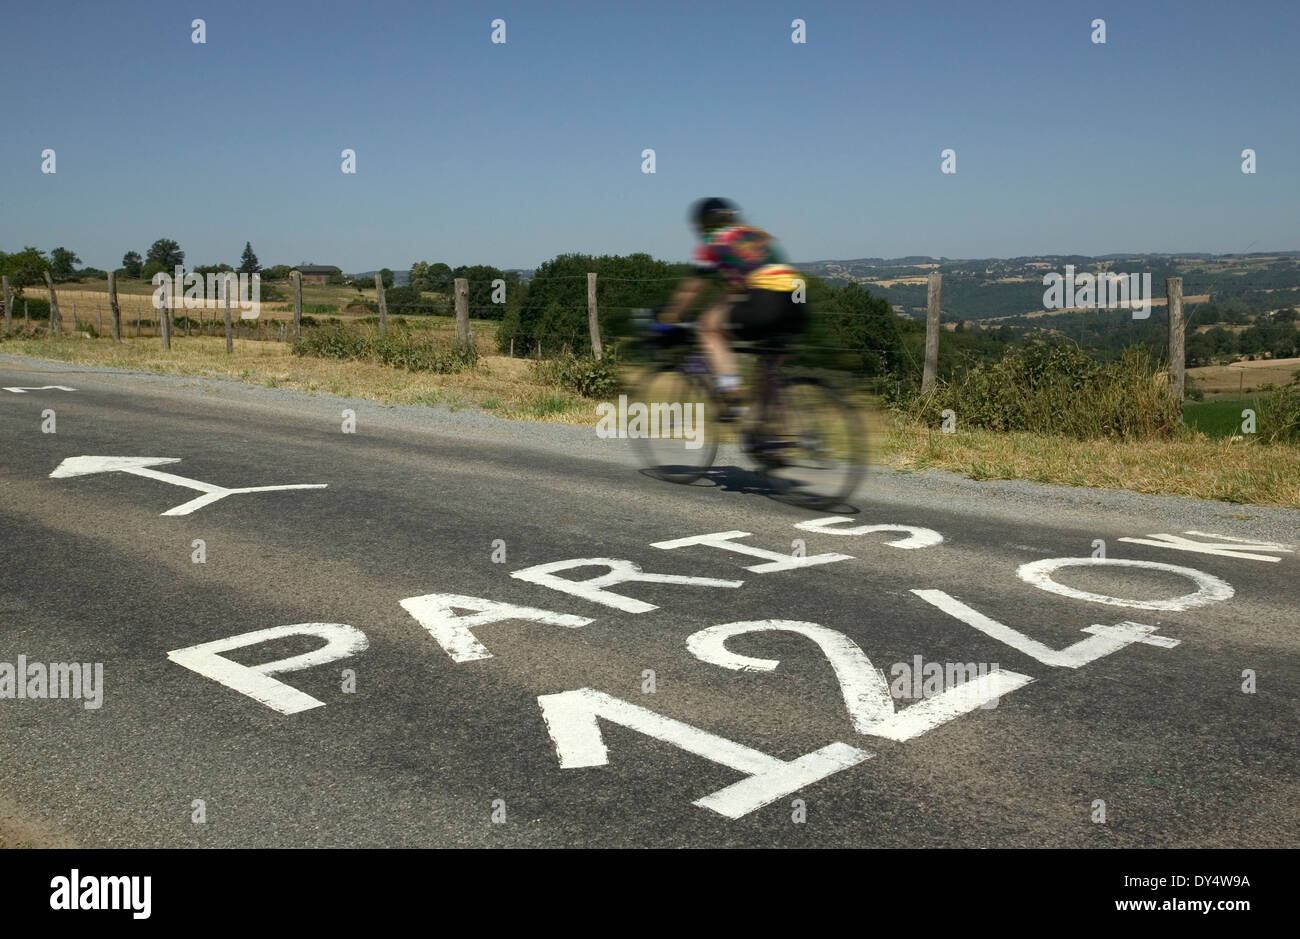 2004 Tour de France St-Flour Stage 11 rider crossing road grafitti. Stock Photo